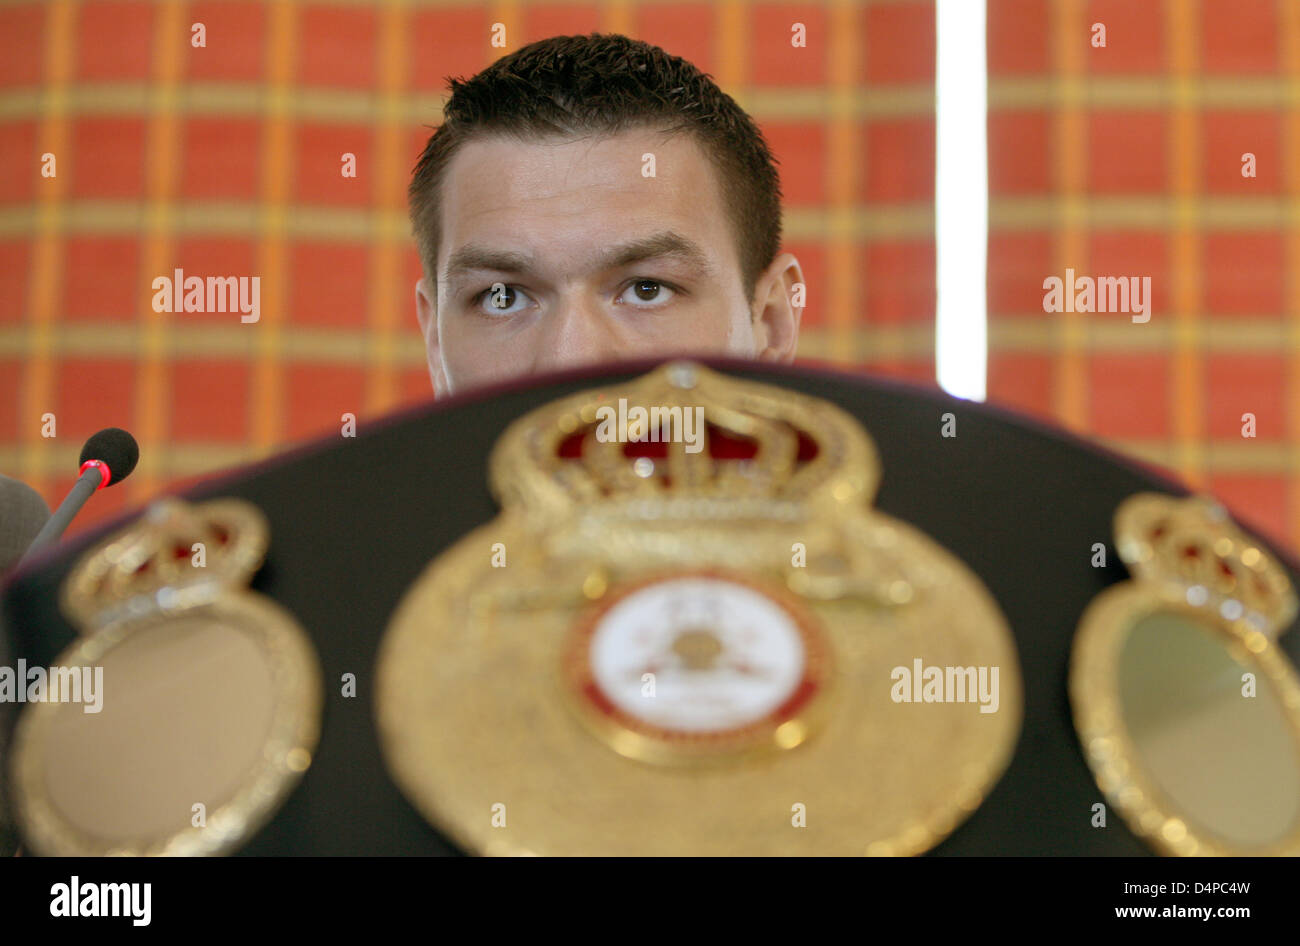 dpa) - Russian boxer Nikolai Valuev has shouldered the world